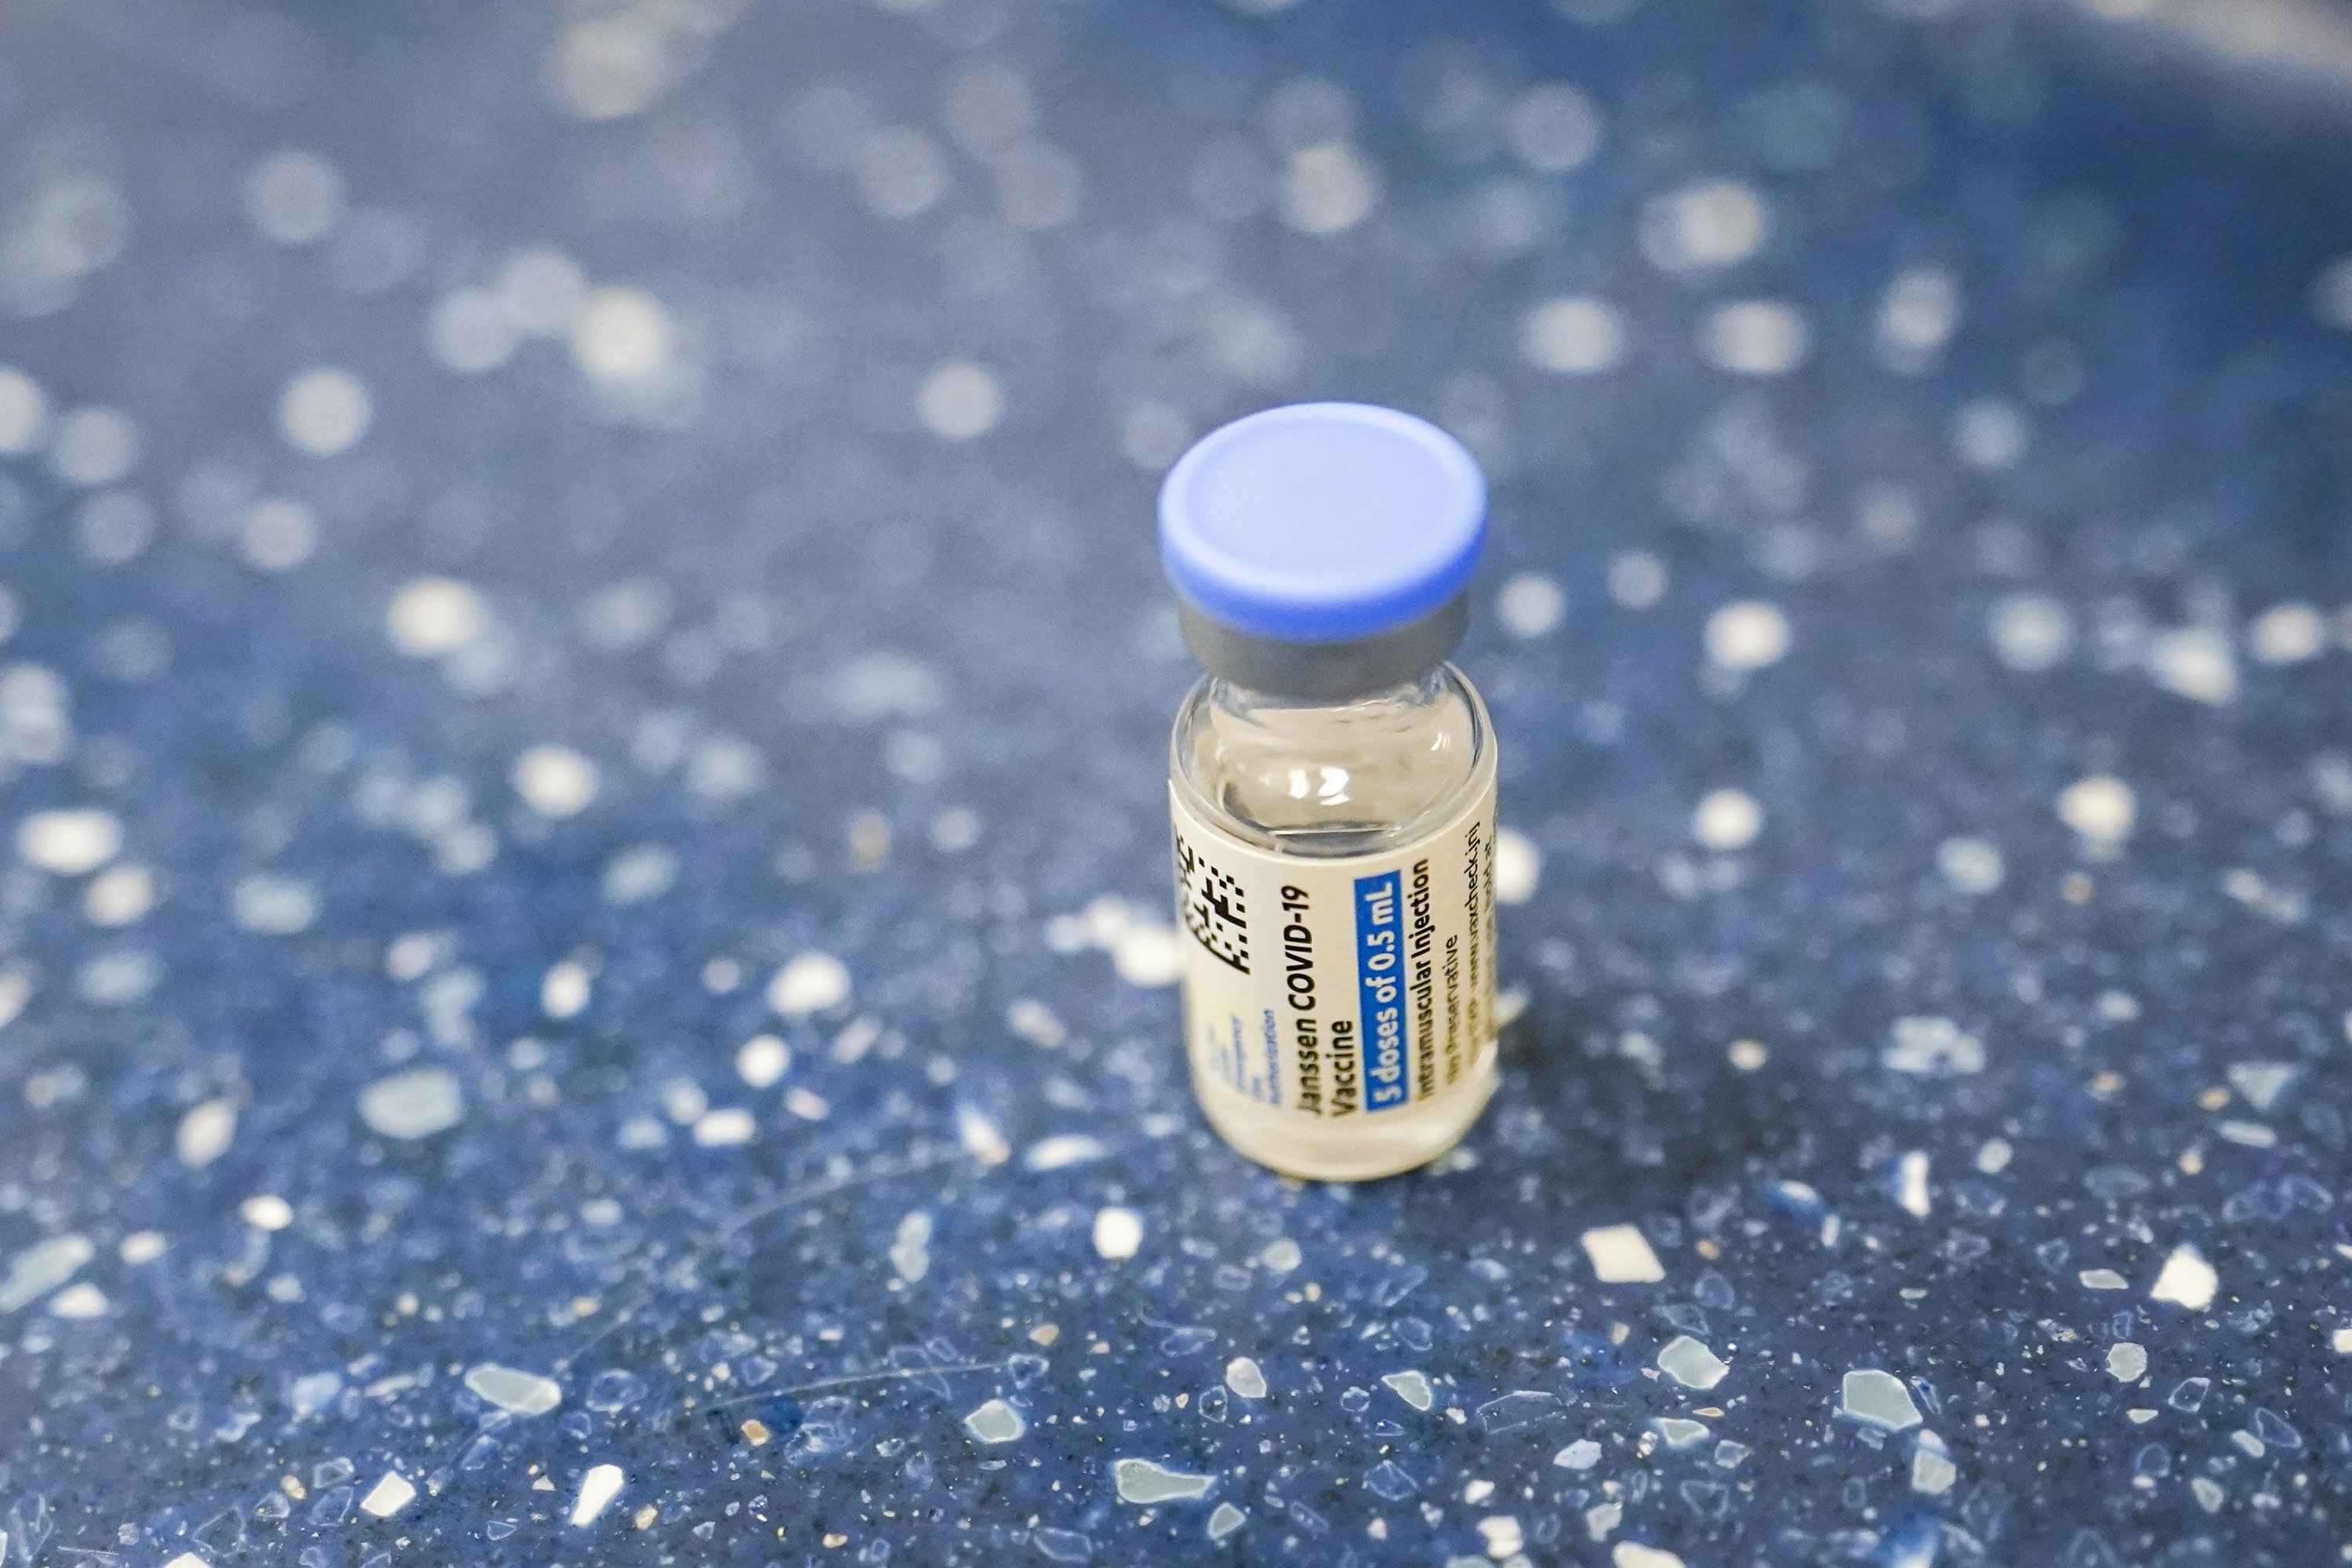 Johnson & Johnson COVID-19 vaccine batch fails quality check - The Associated Press